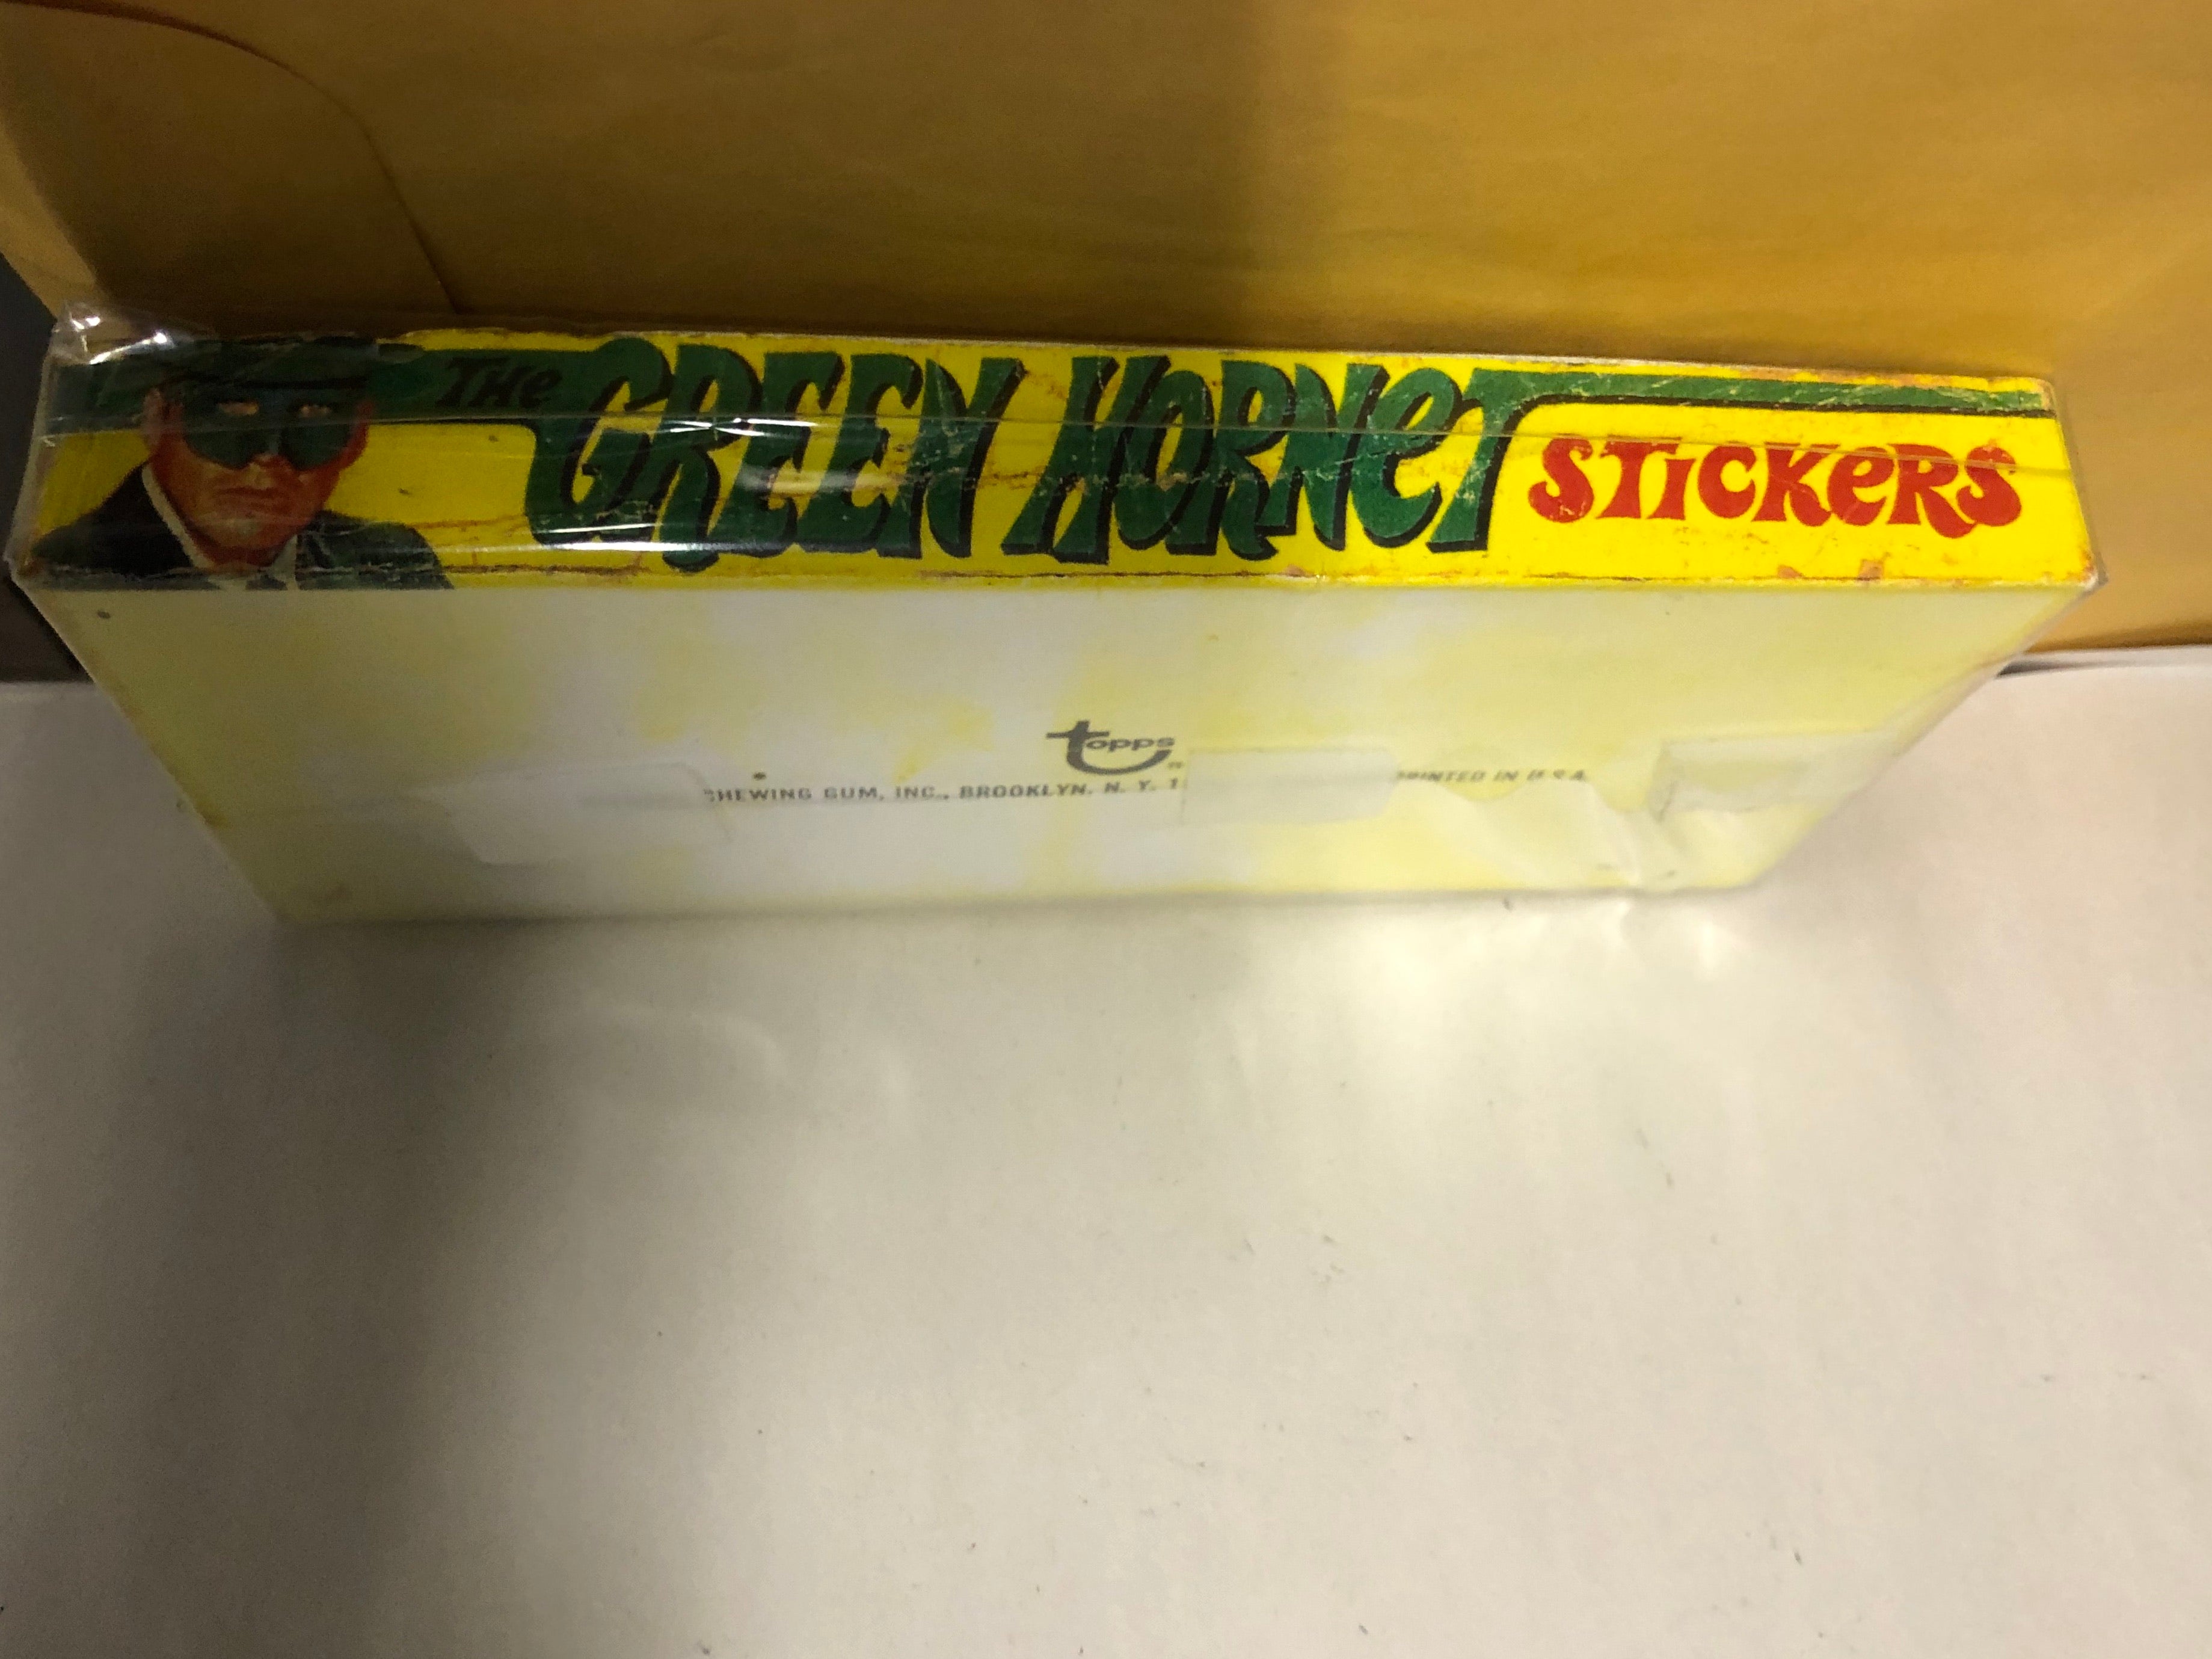 Green Hornet TV show rare replica stickers empty display box